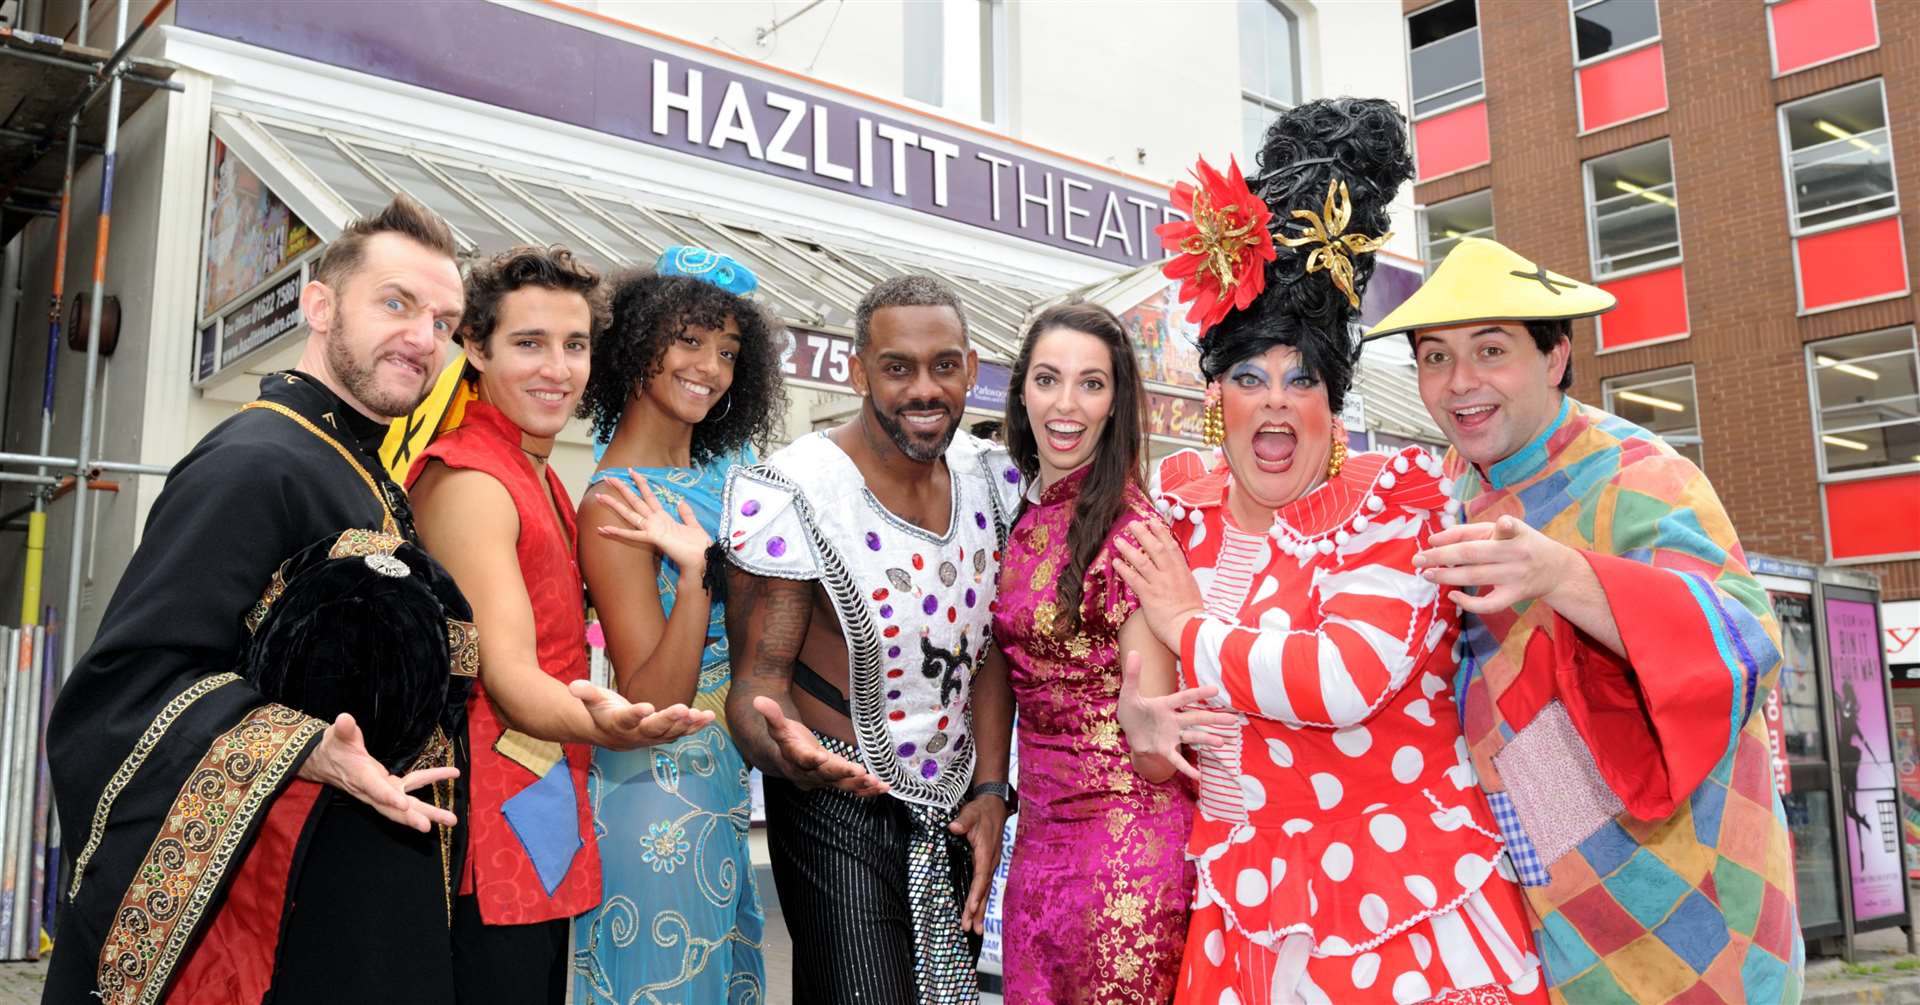 The cast of Aladdin - Hazlitt’s panto this year Picture:Simon Hildrew